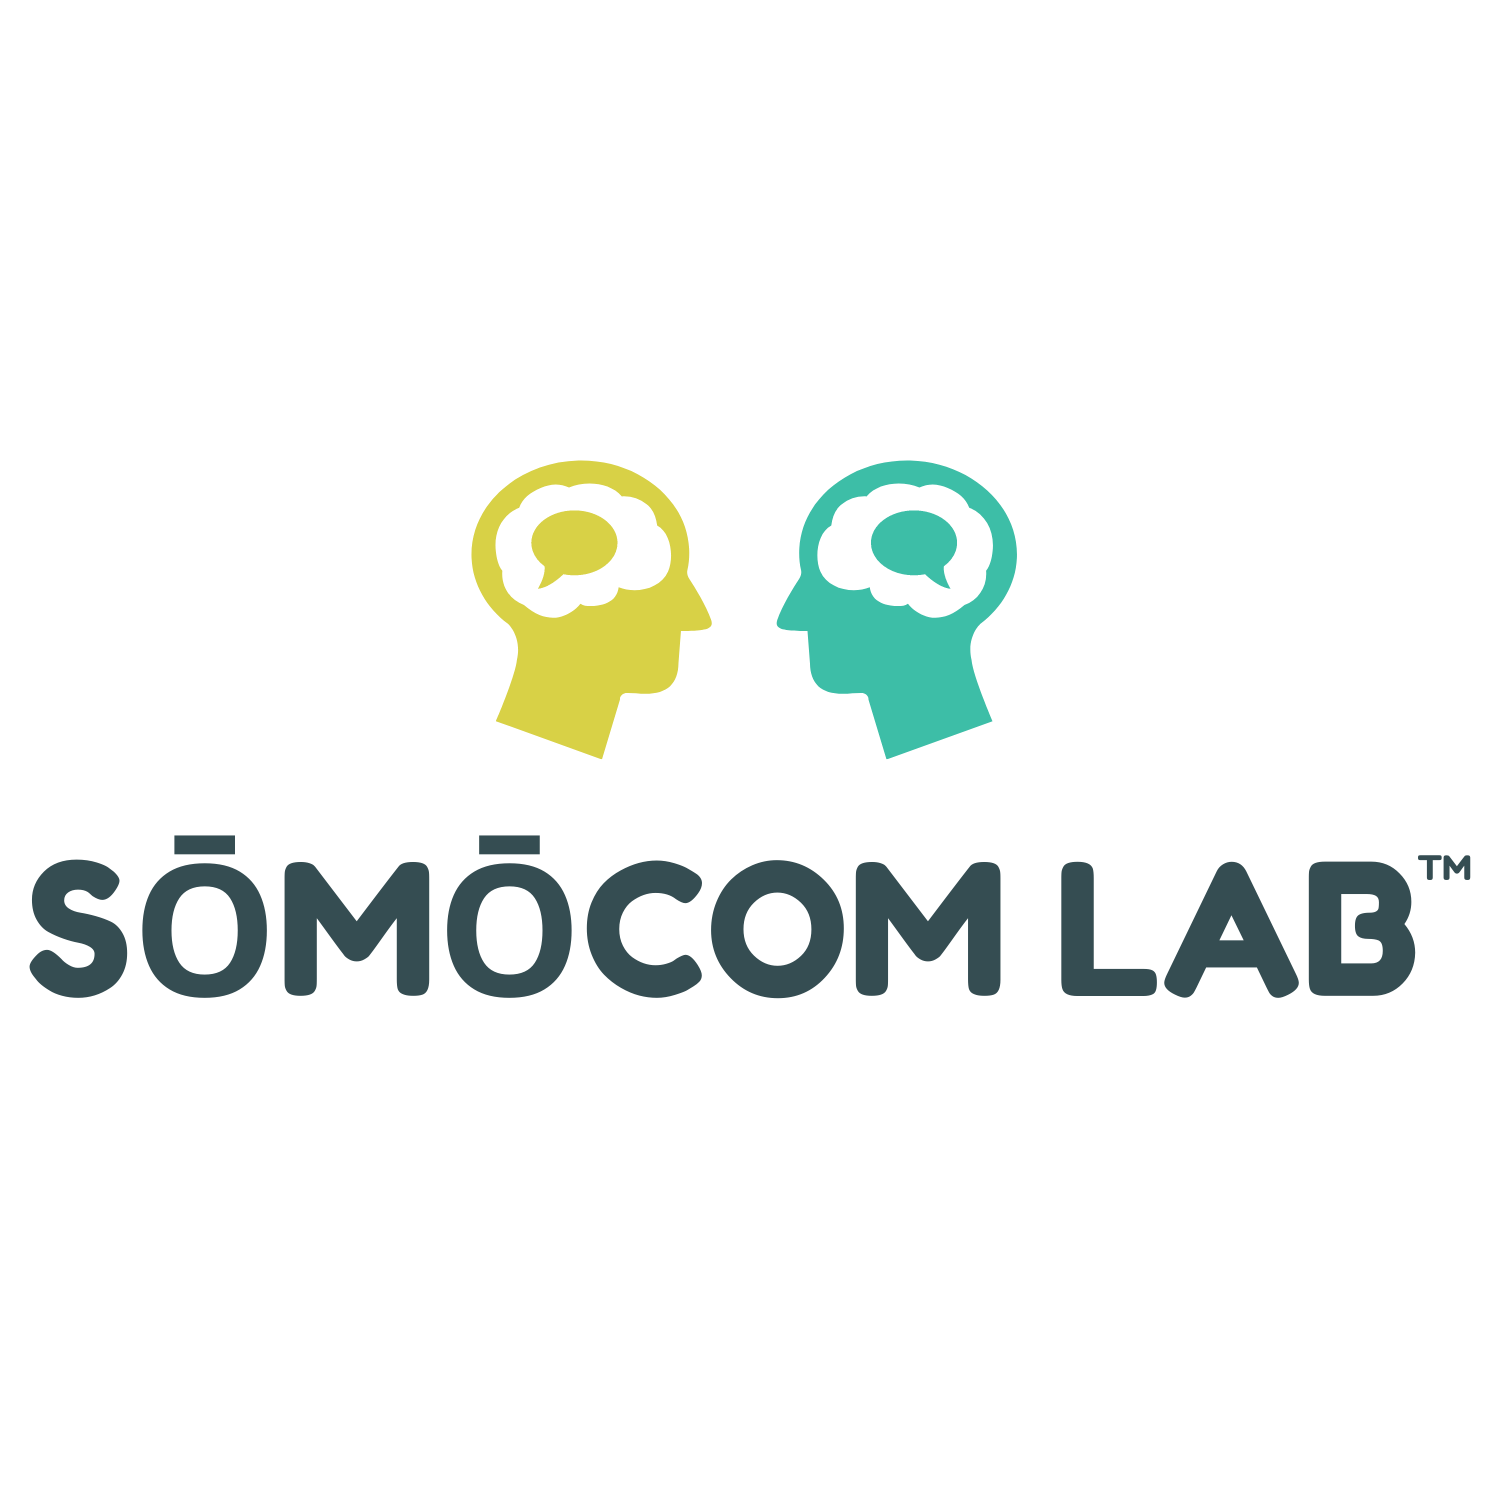 Somocom Lab logo